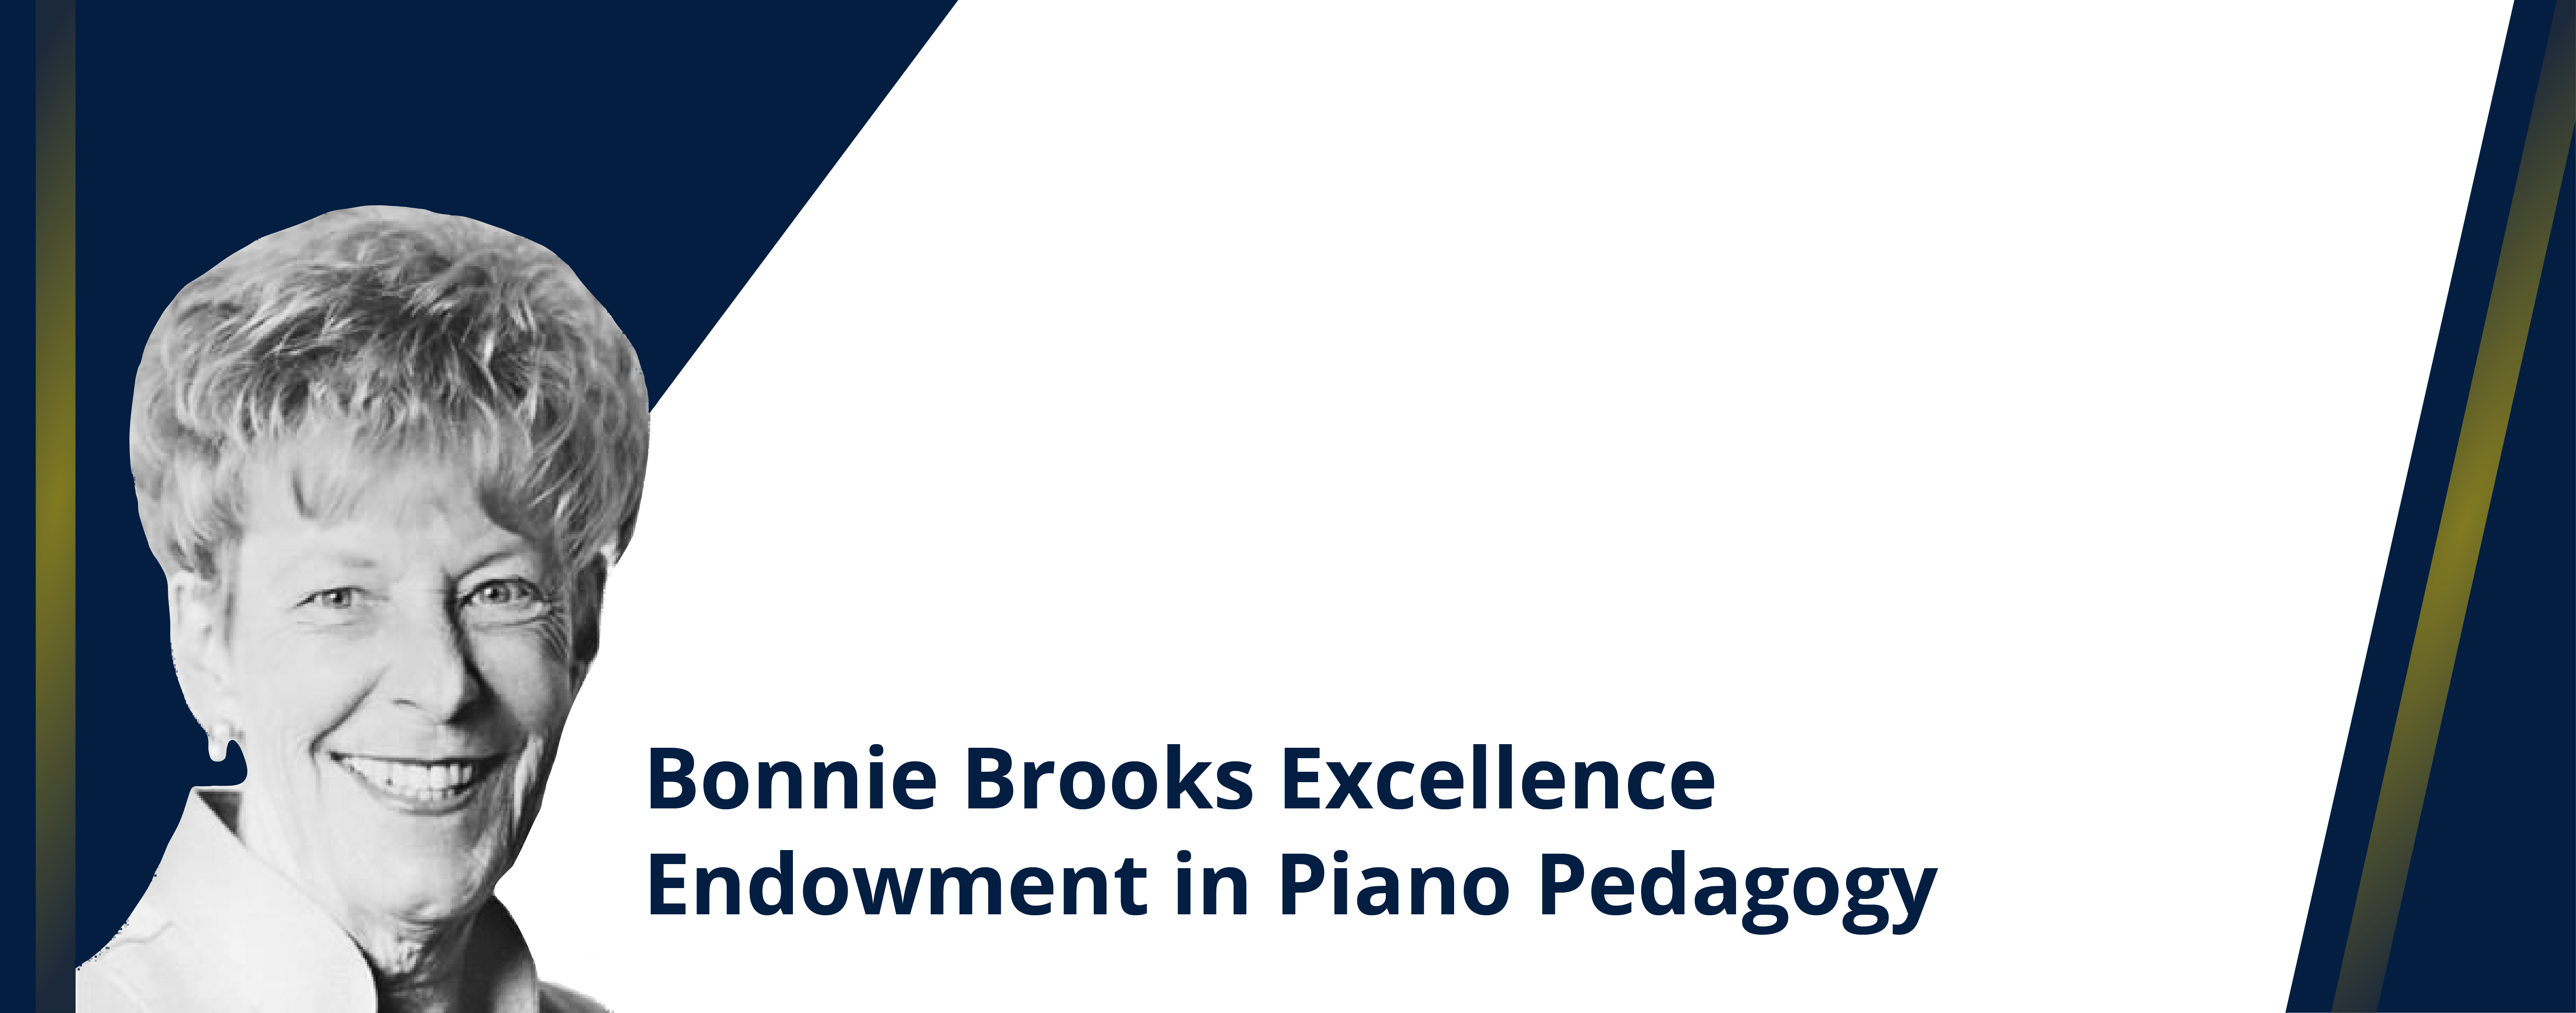 New Endowment in Piano Pedagogy! 